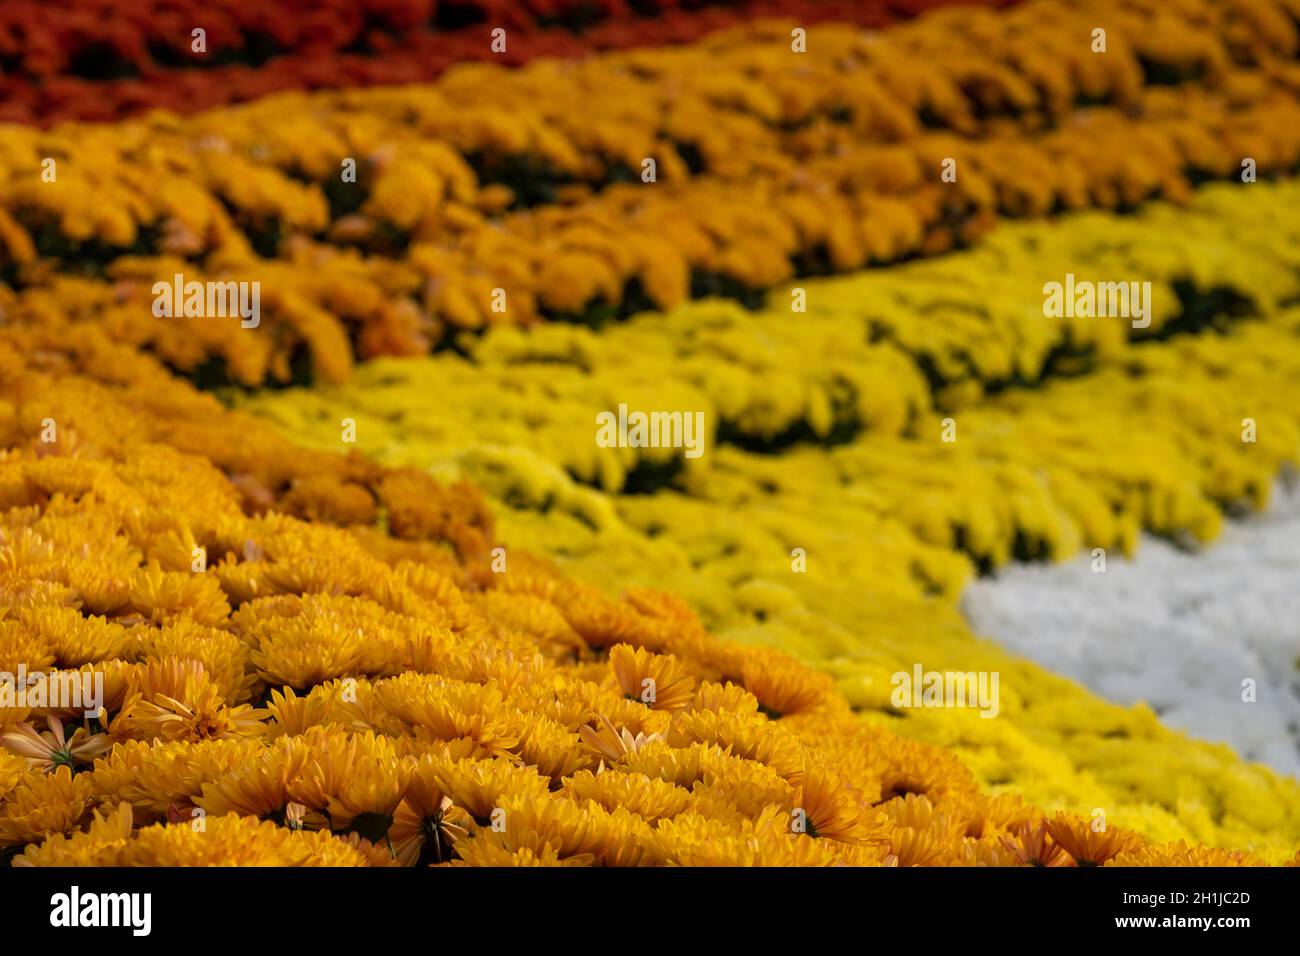 Display of colourful chrysanthemum flowers, in yellow, orange red and white, at Kew Gardens, London UK Stock Photo